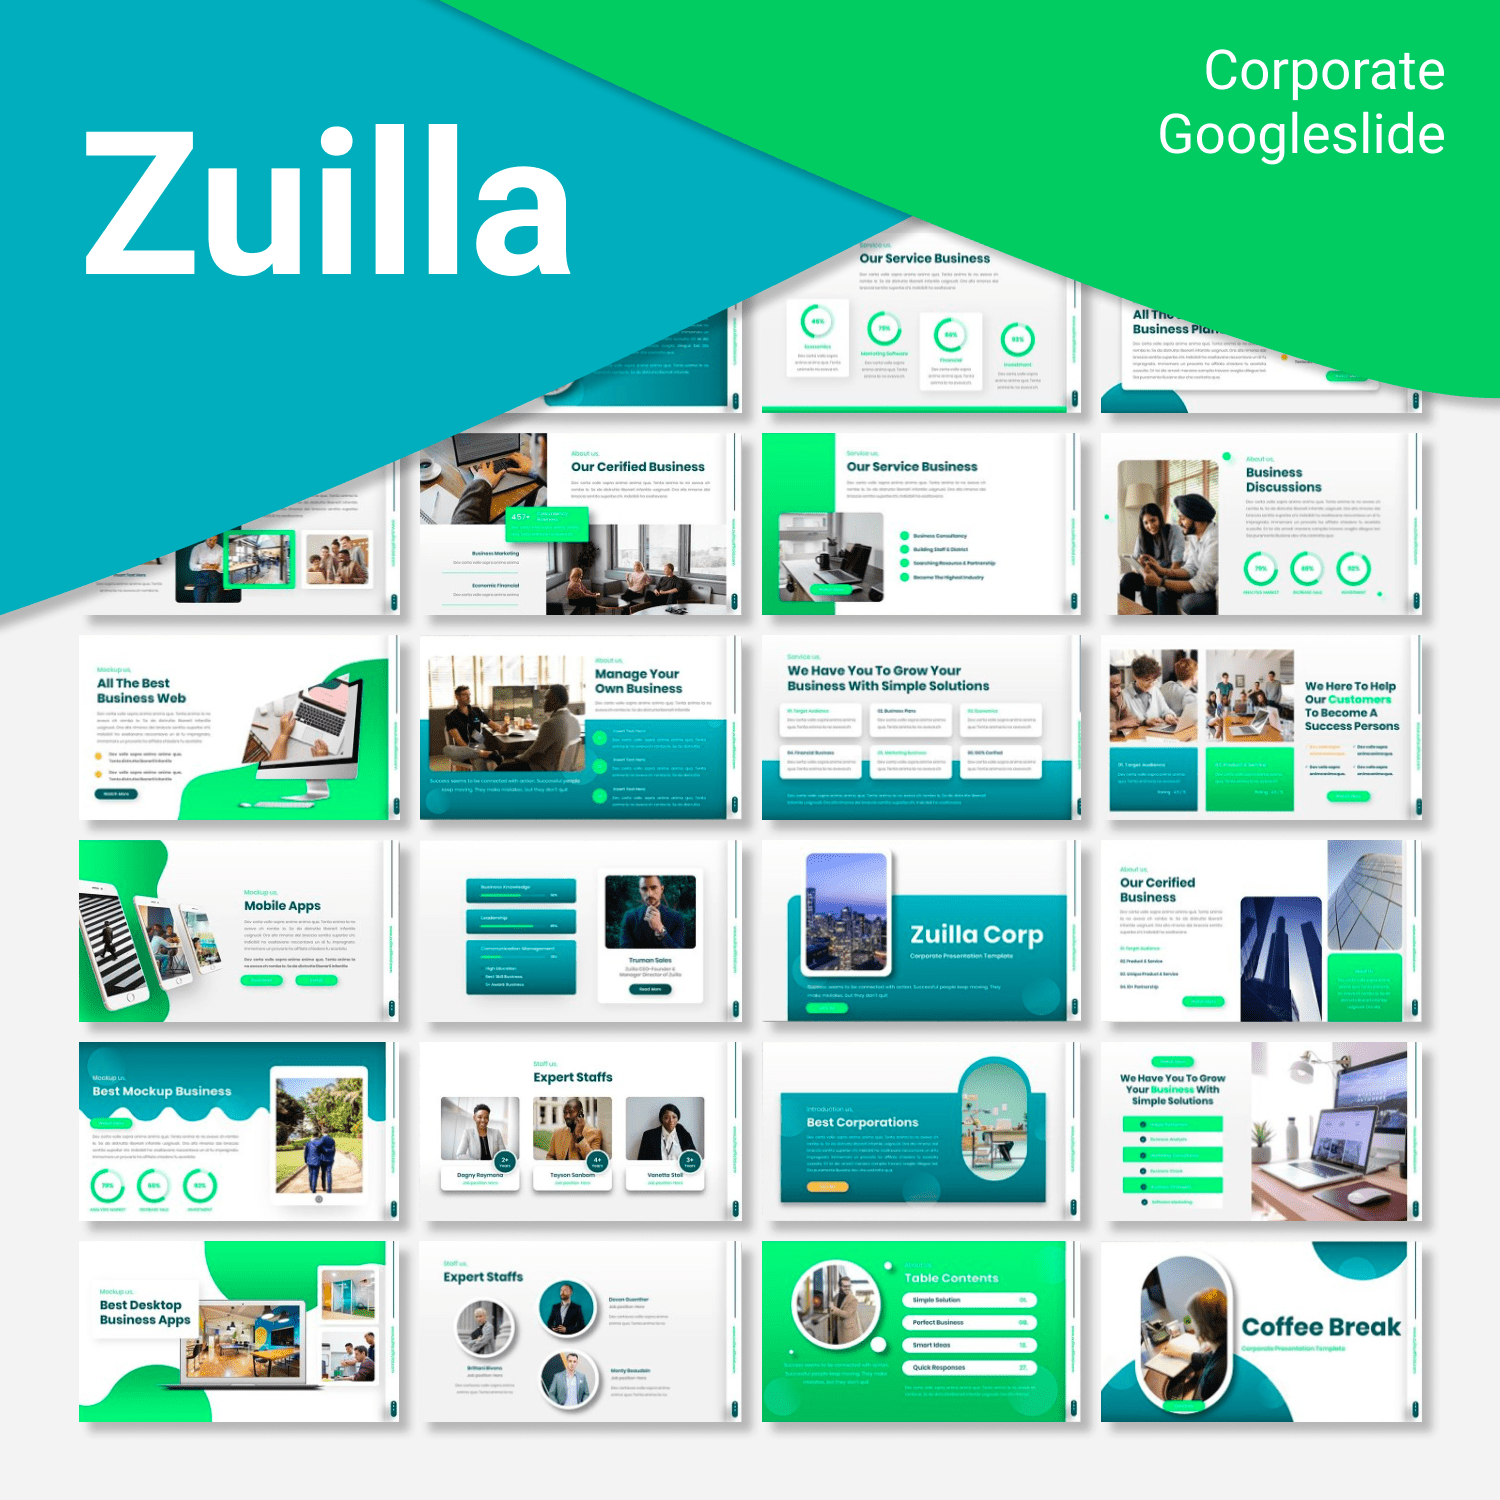 Zuilla Corporate Googleslide main cover.